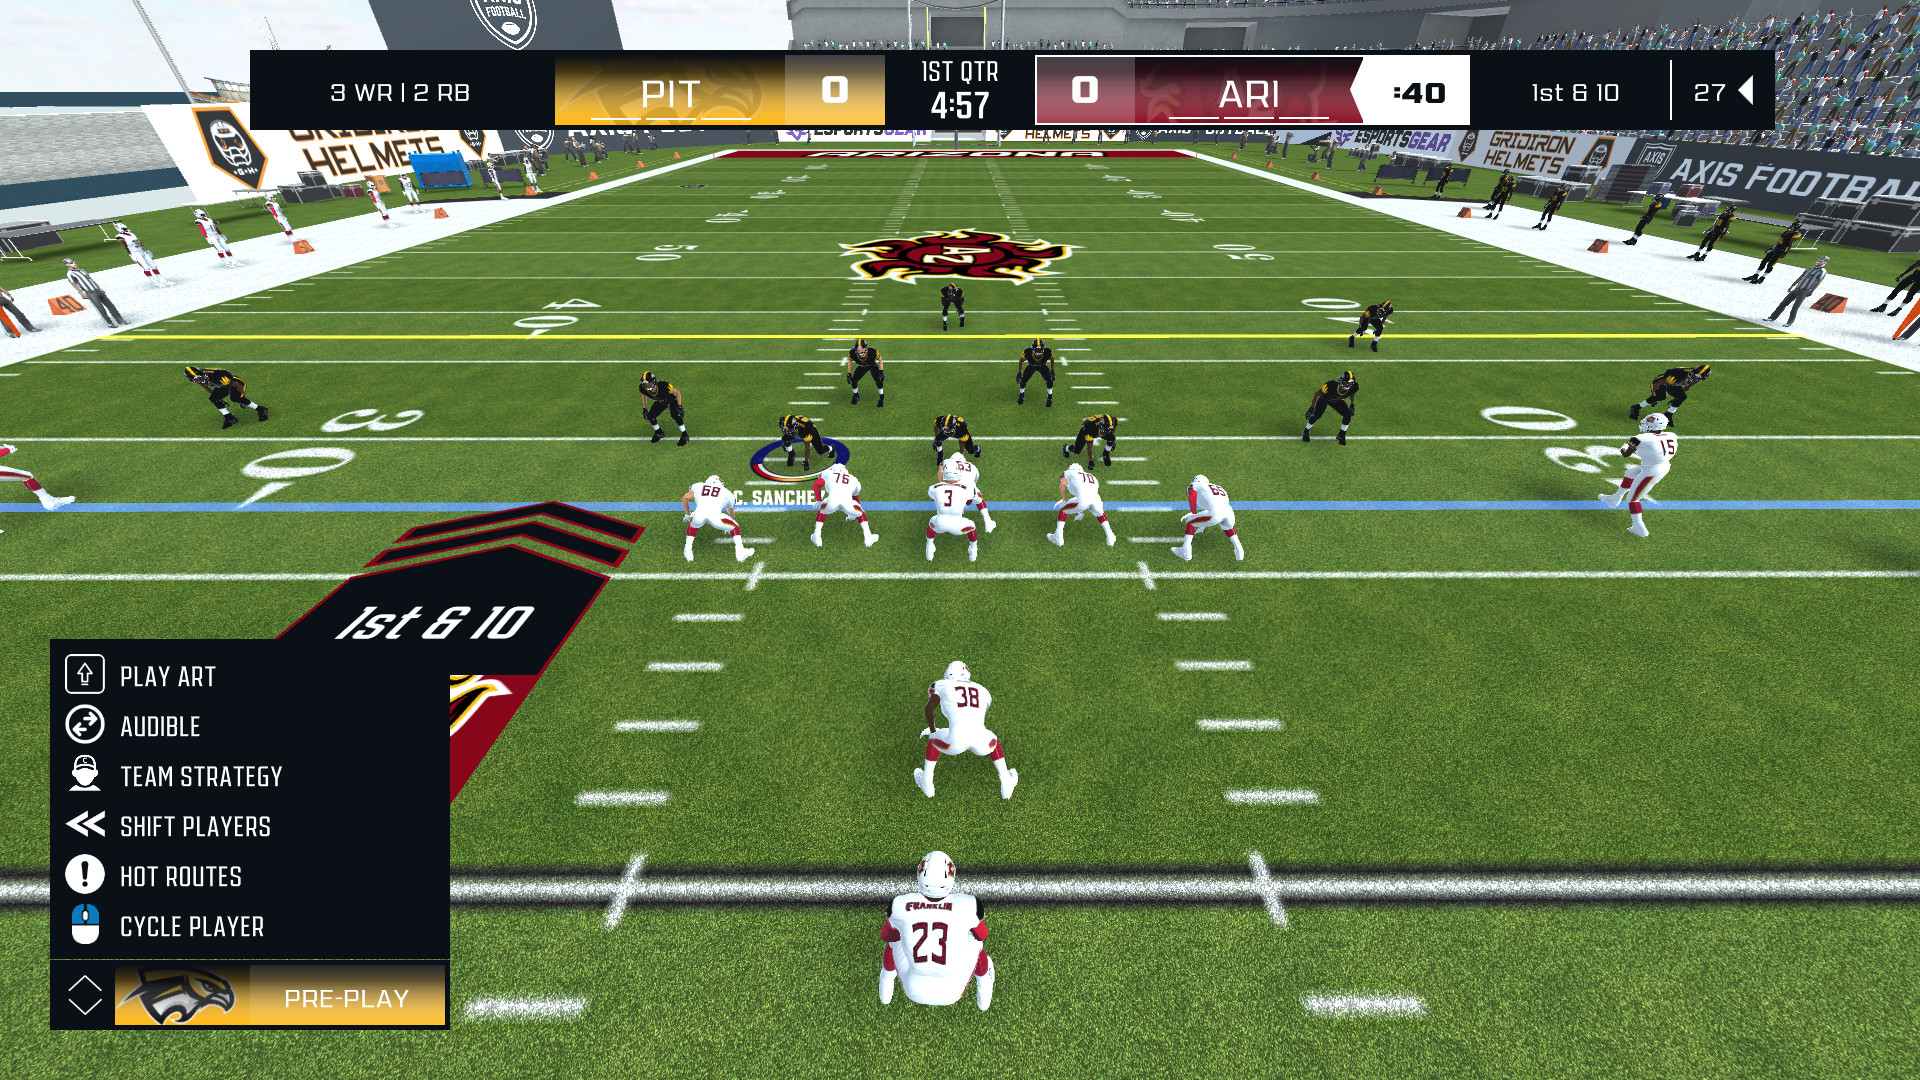 Axis Football 2020 screenshot